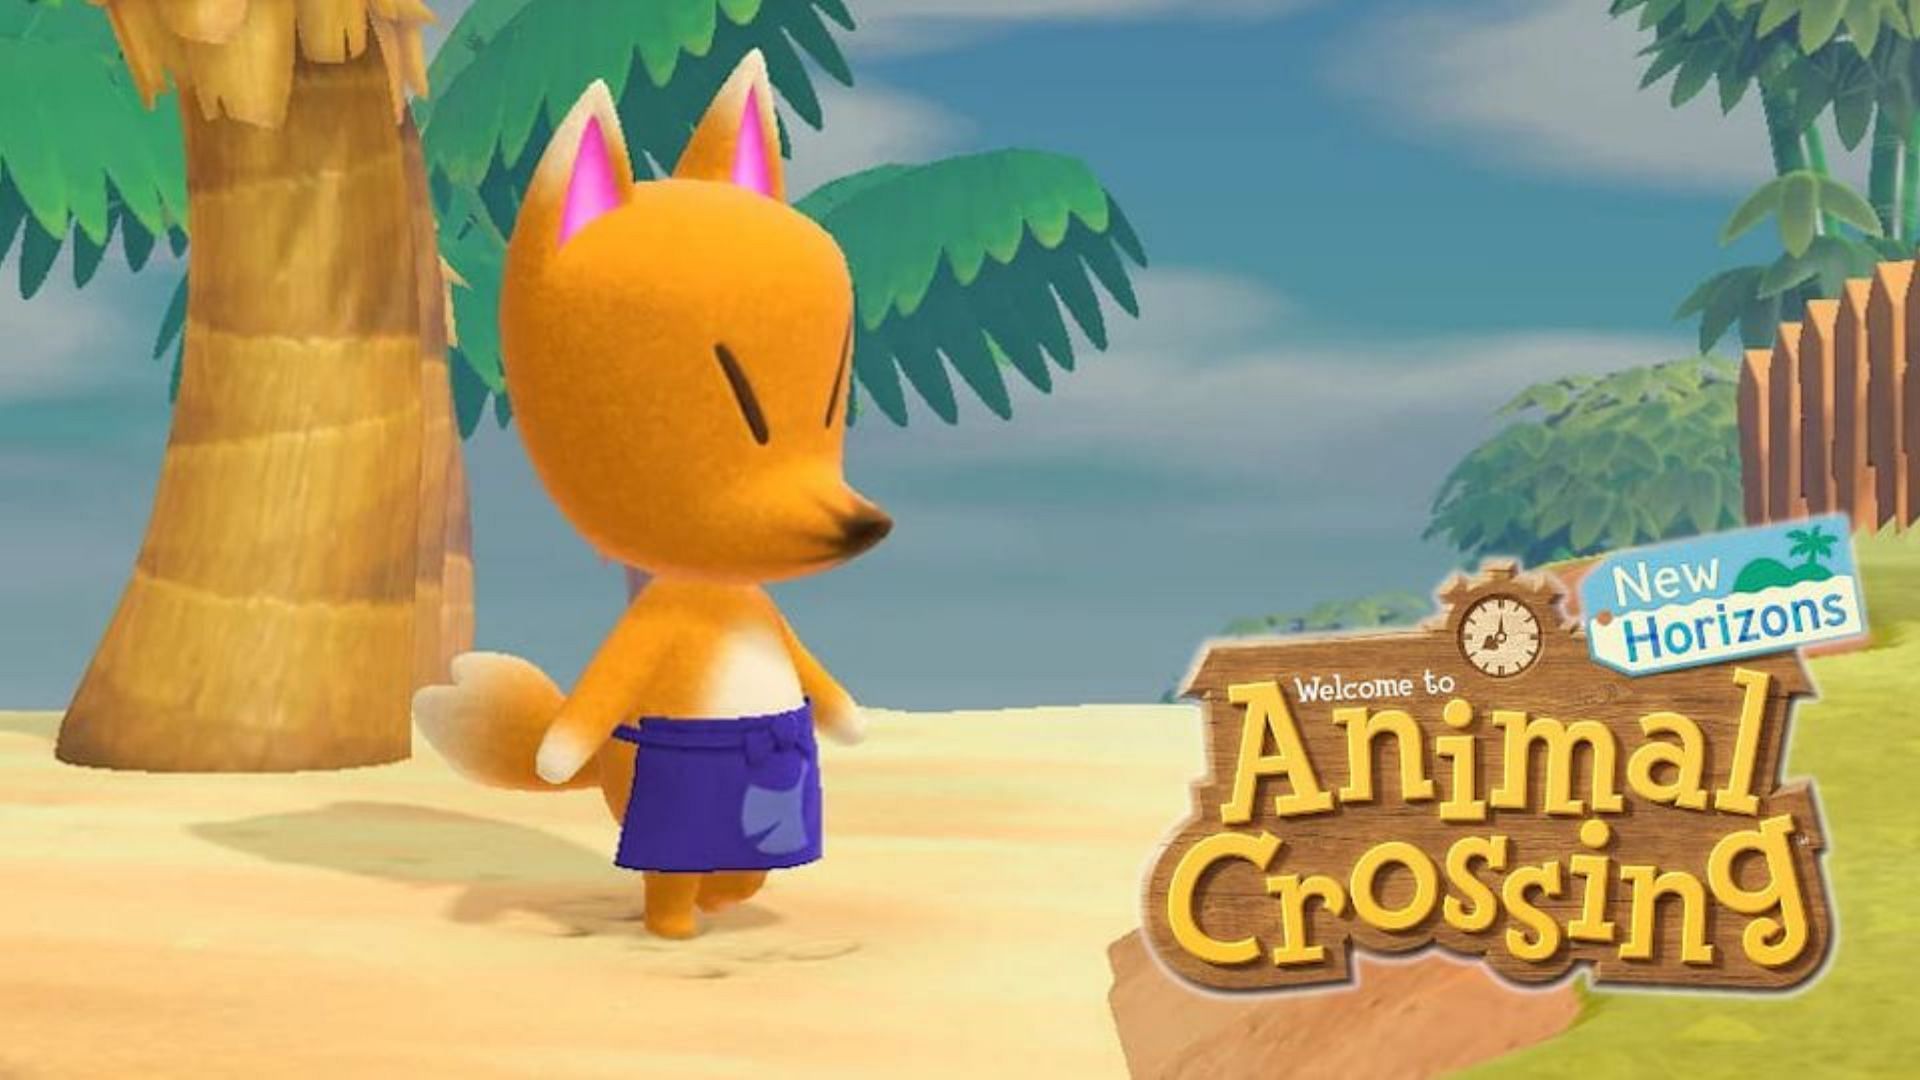 Redd is one of the many bizarre NPCs of Animal Crossing New Horizons (Image via Nintendo)